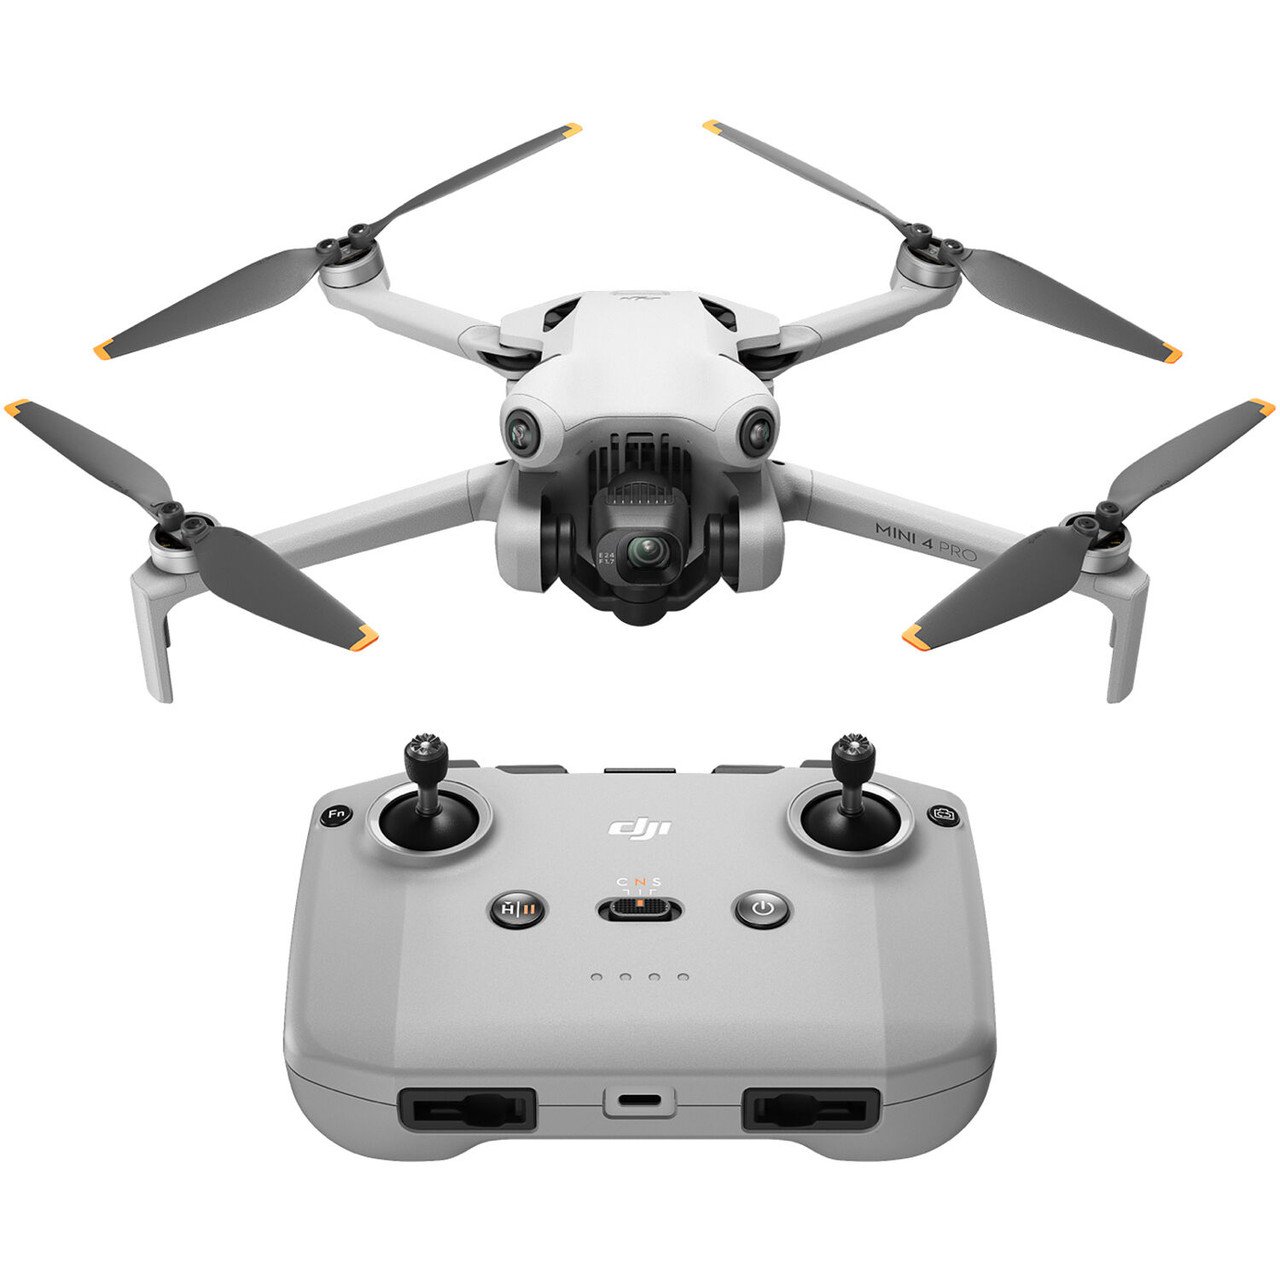 DJI Mini 4 Pro, the perfect mini drone? Full test.